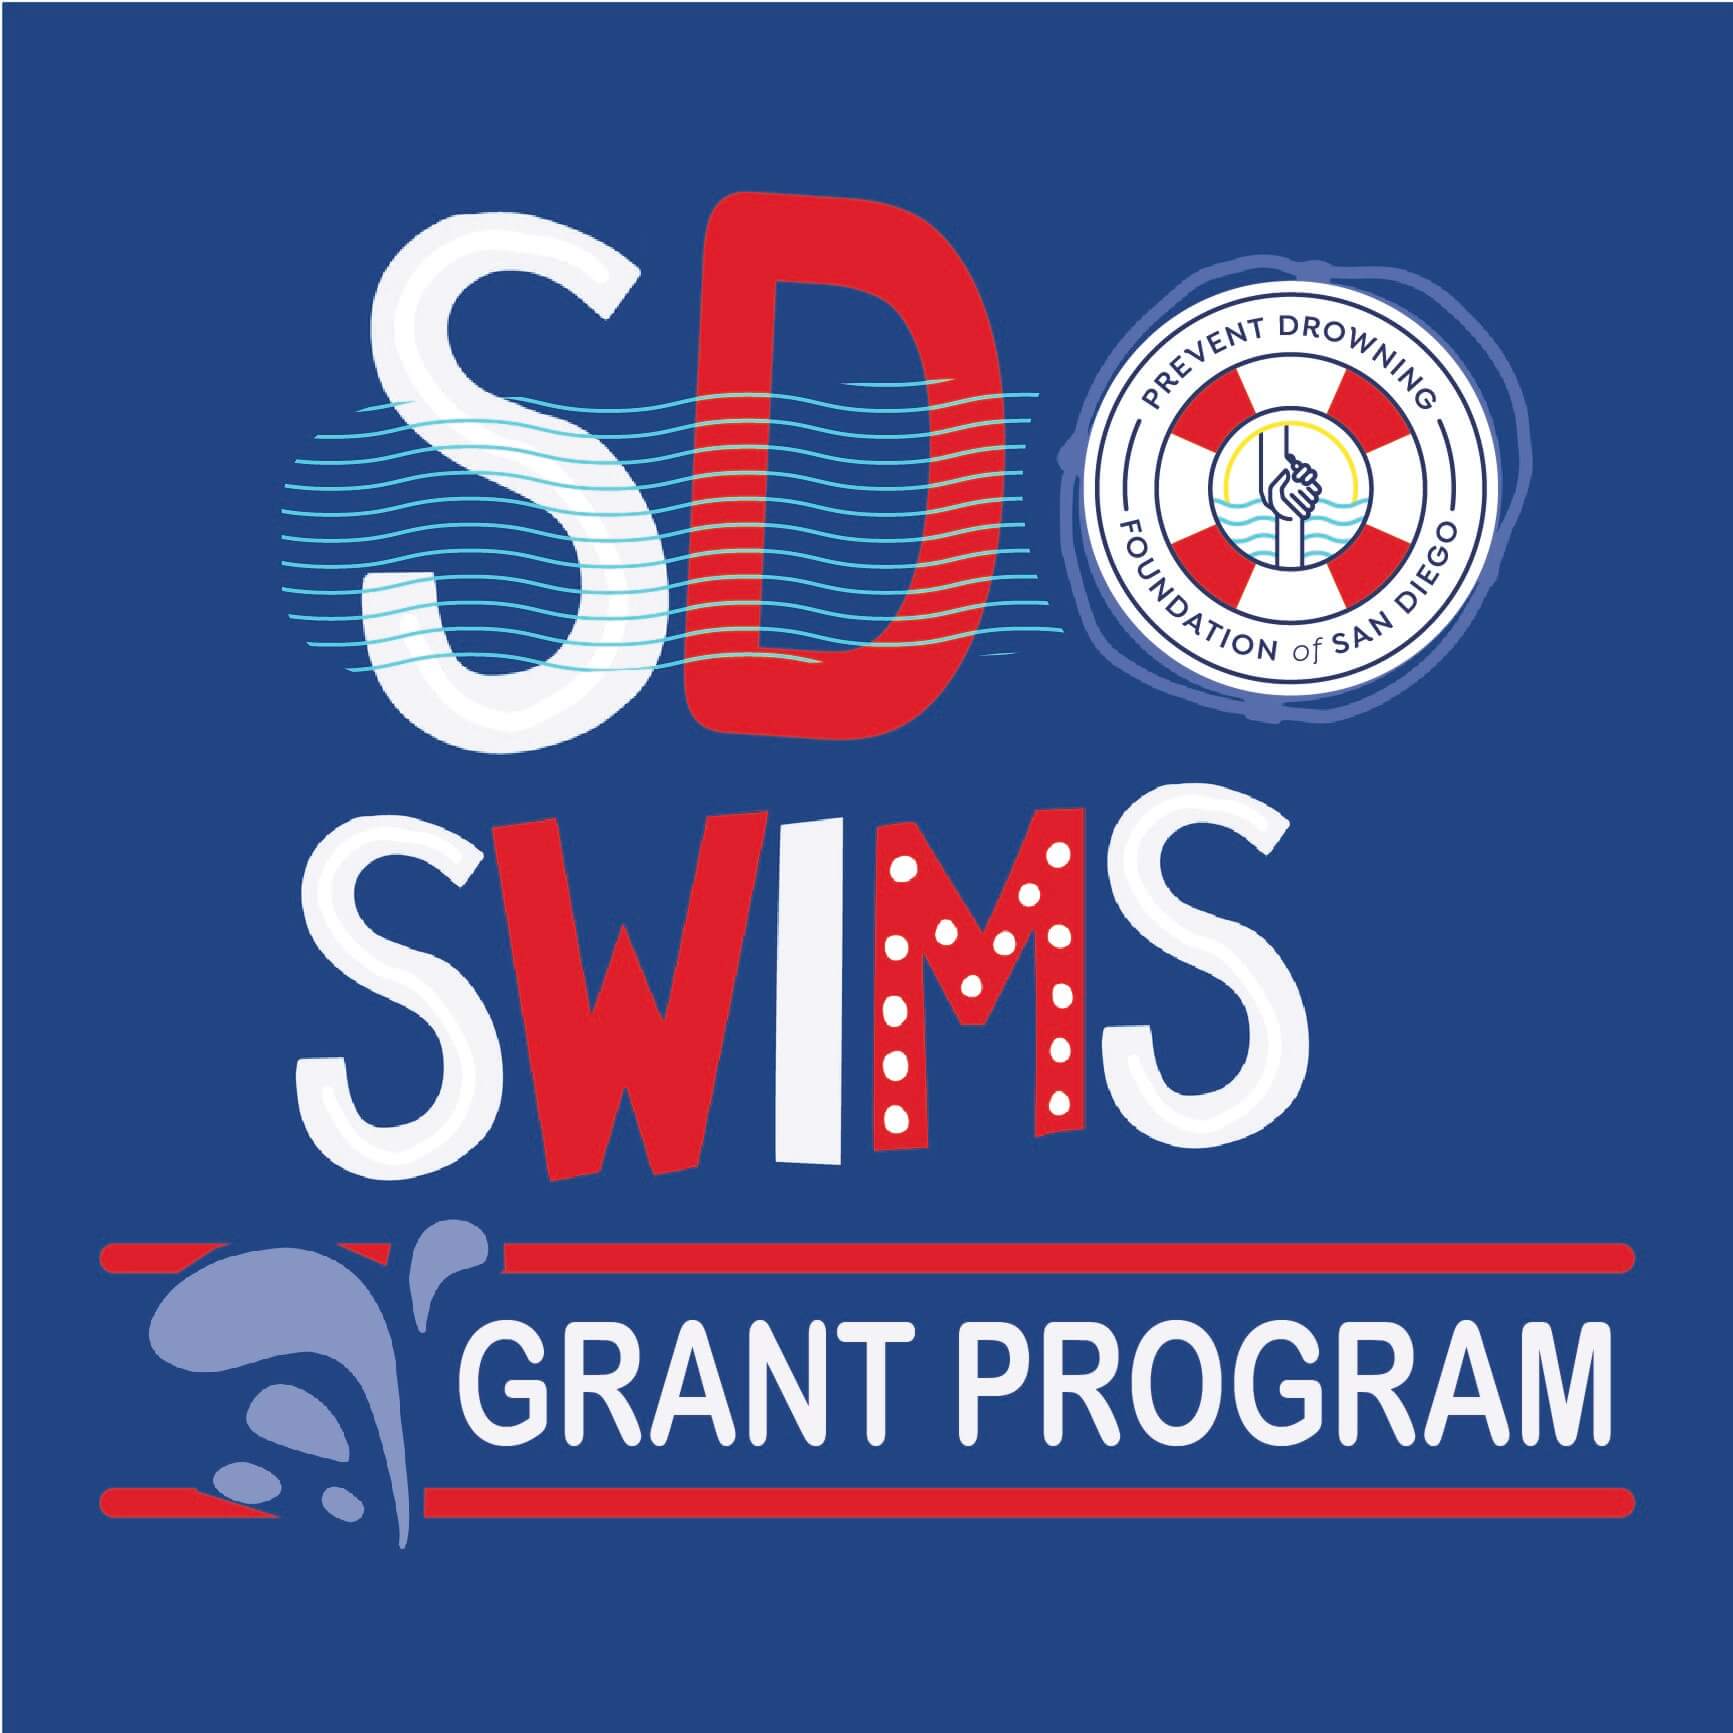 sd swims grant program